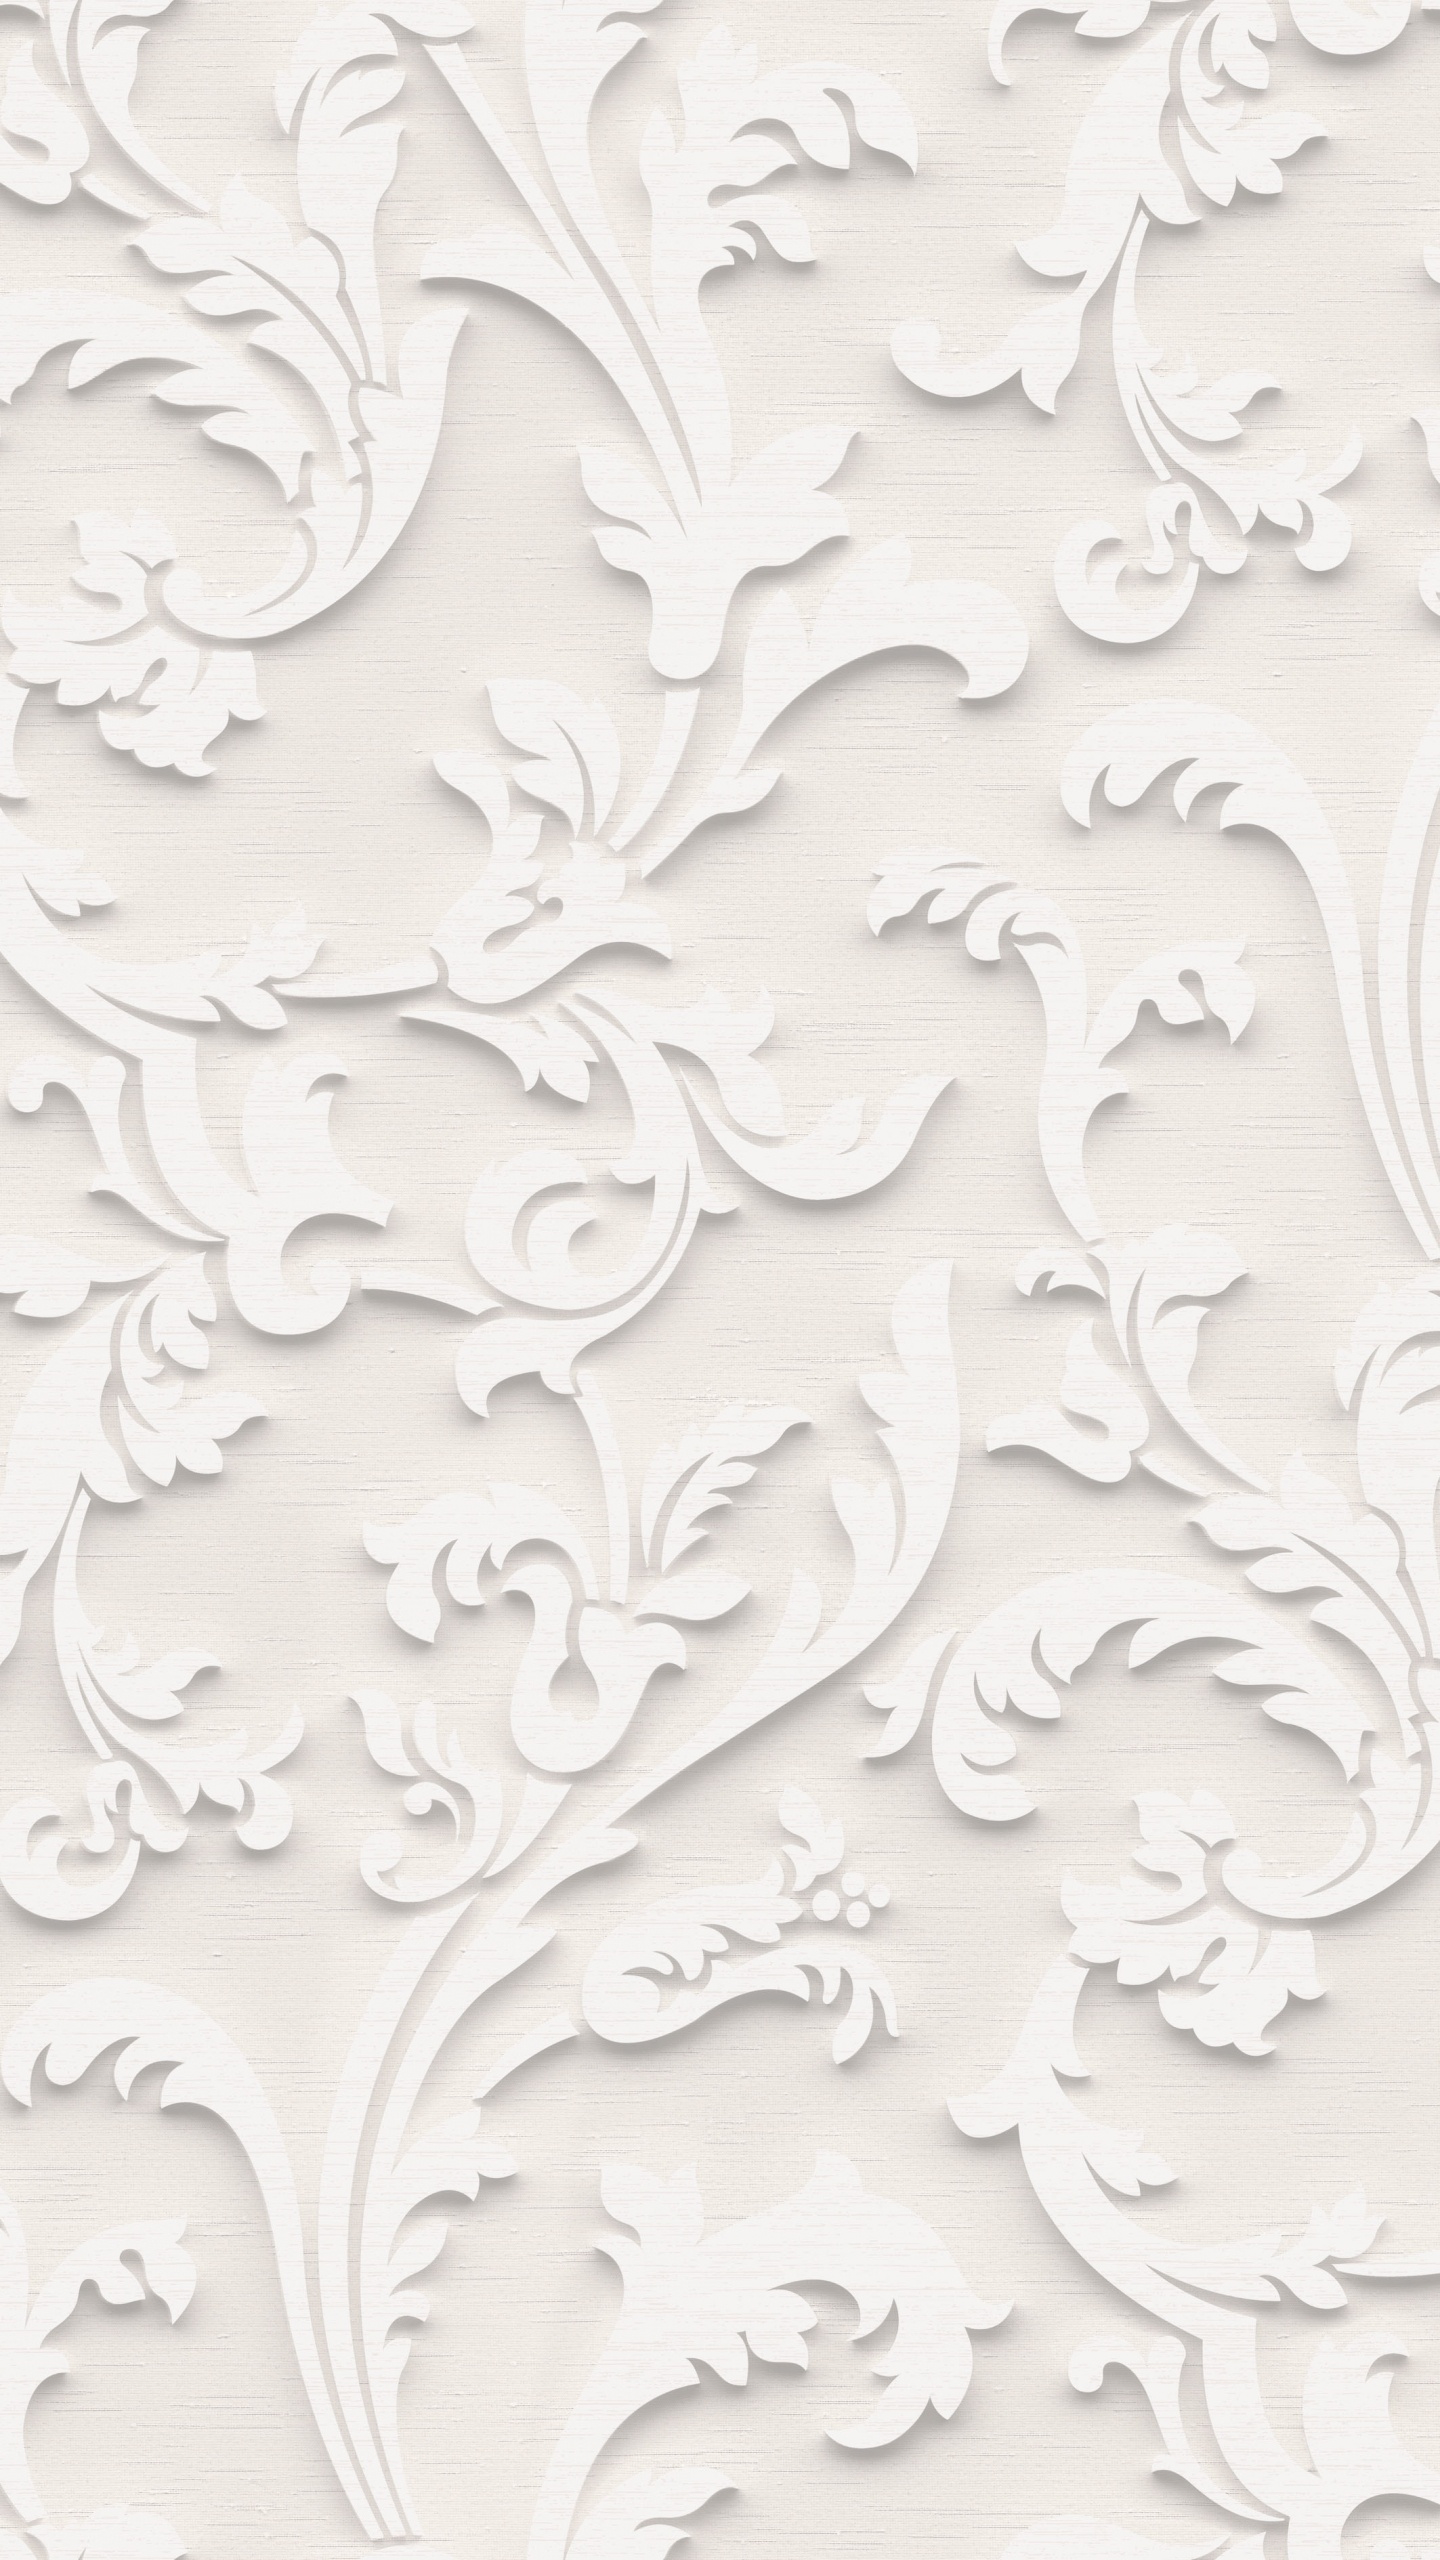 Textil Floral Blanco y Gris. Wallpaper in 1440x2560 Resolution